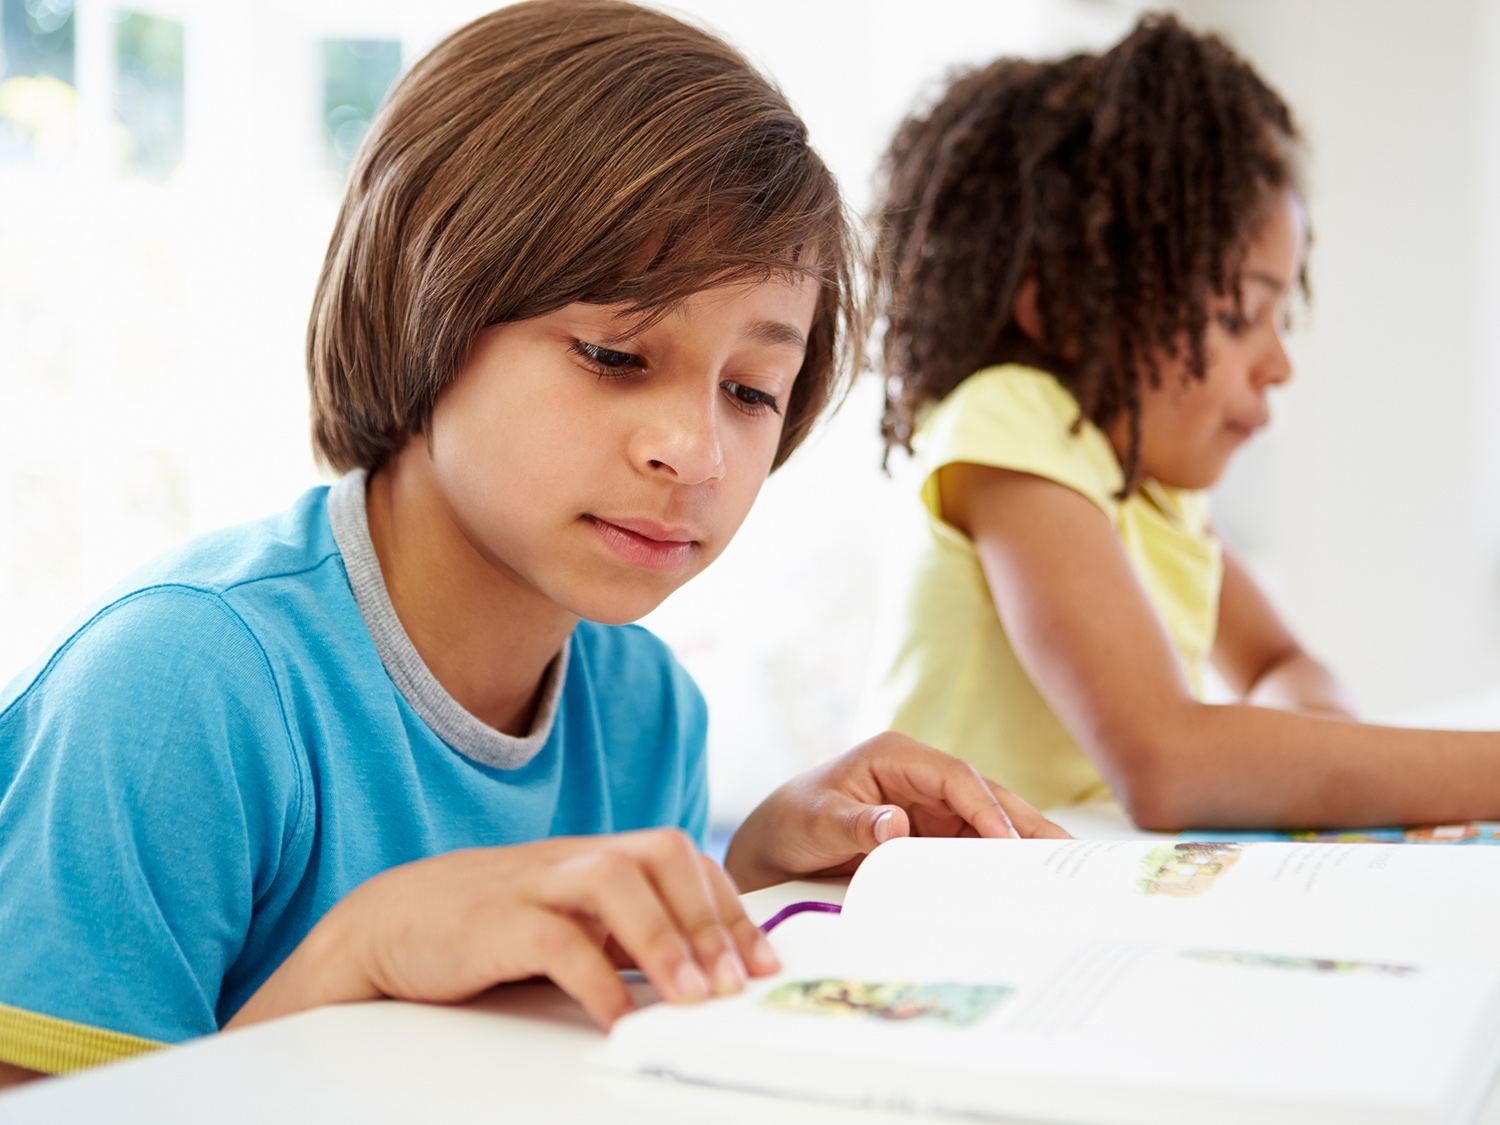 Literacy: Writing at Age 8, Milestones